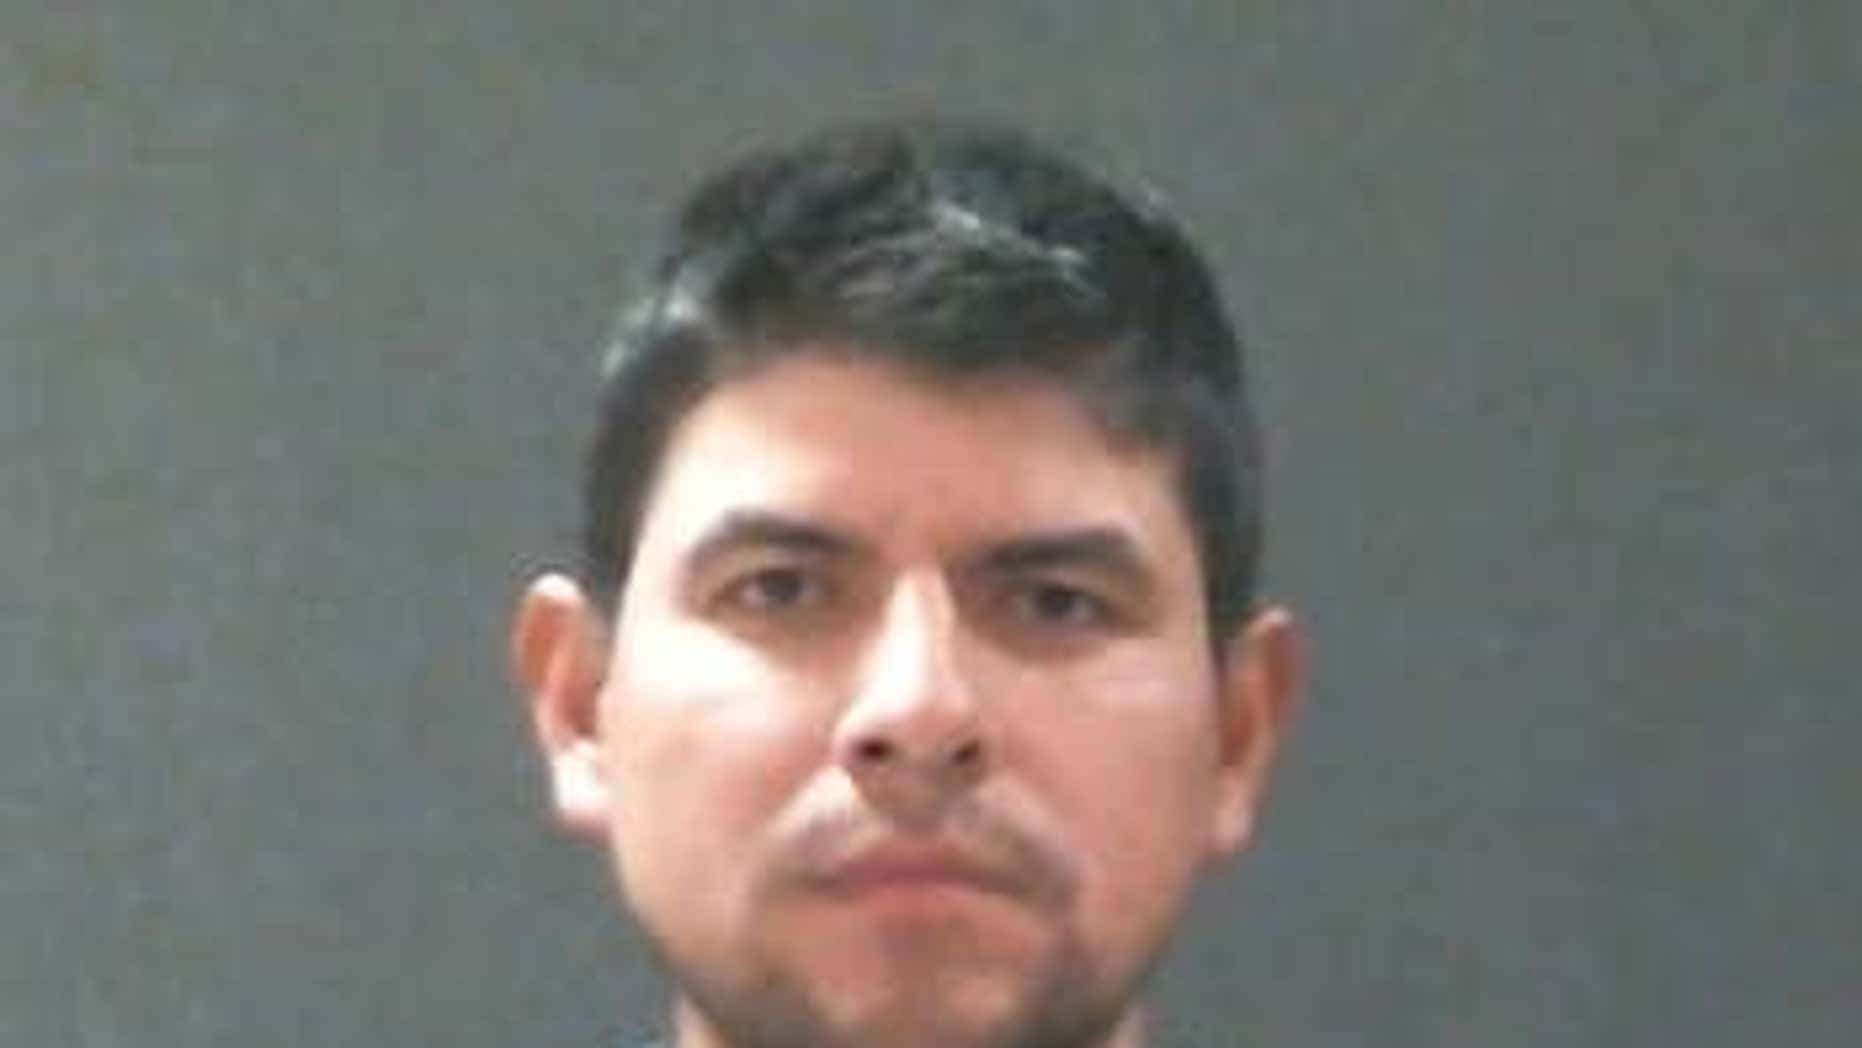 Texas man, 37, sentenced for impregnating girl, 11: prosecutors